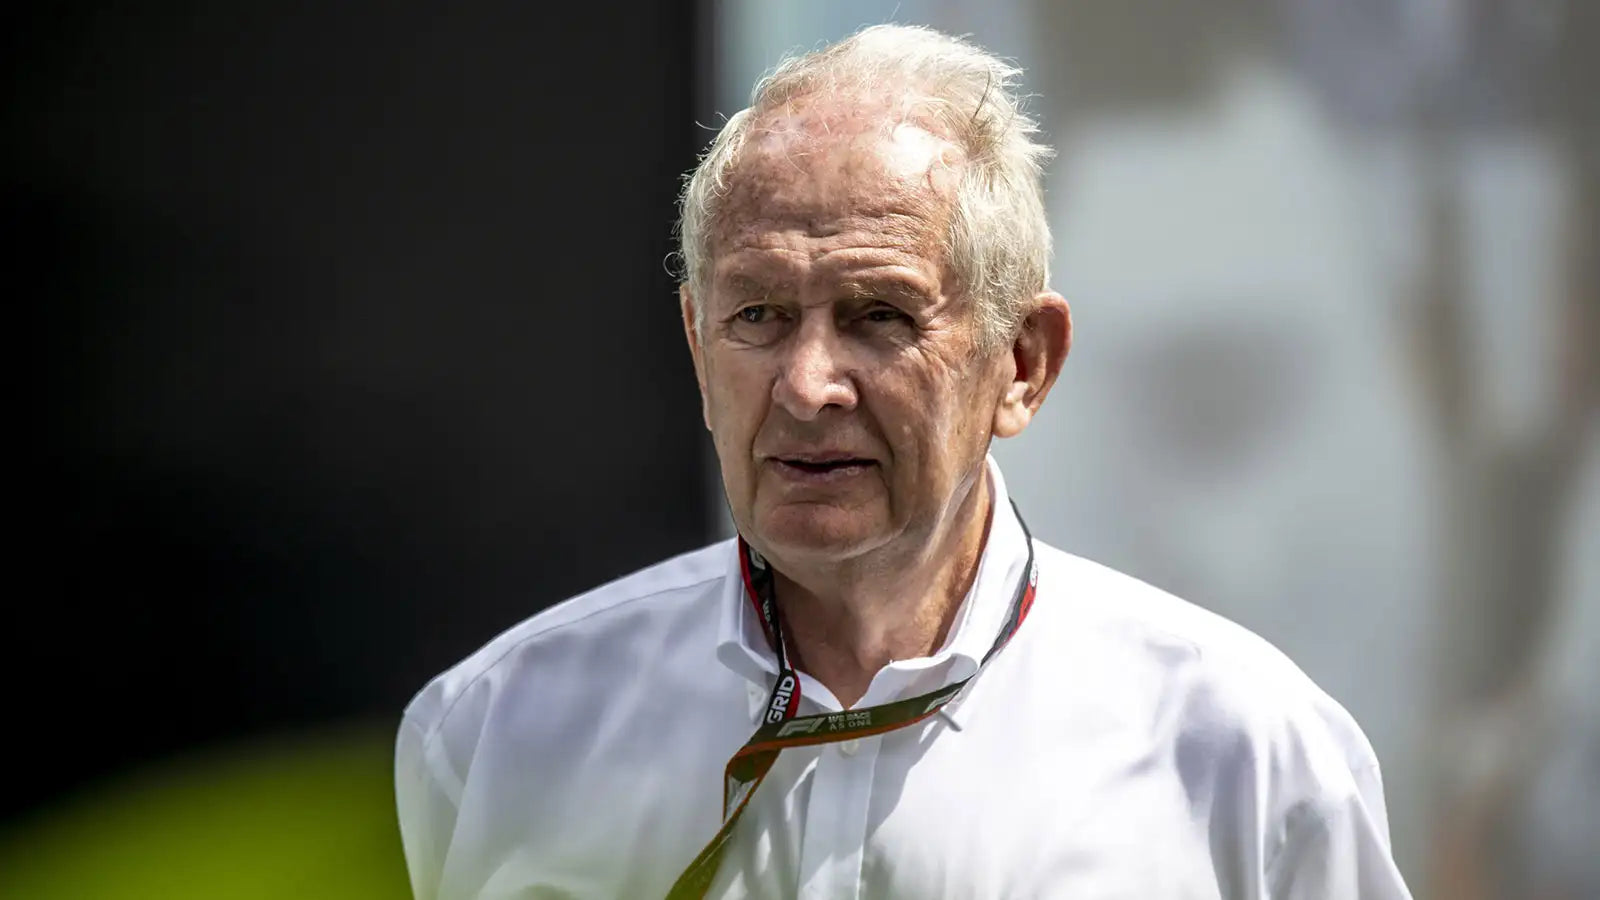 Helmut Marko holds talks with Yuki Tsunoda after Daniel Ricciardo incident